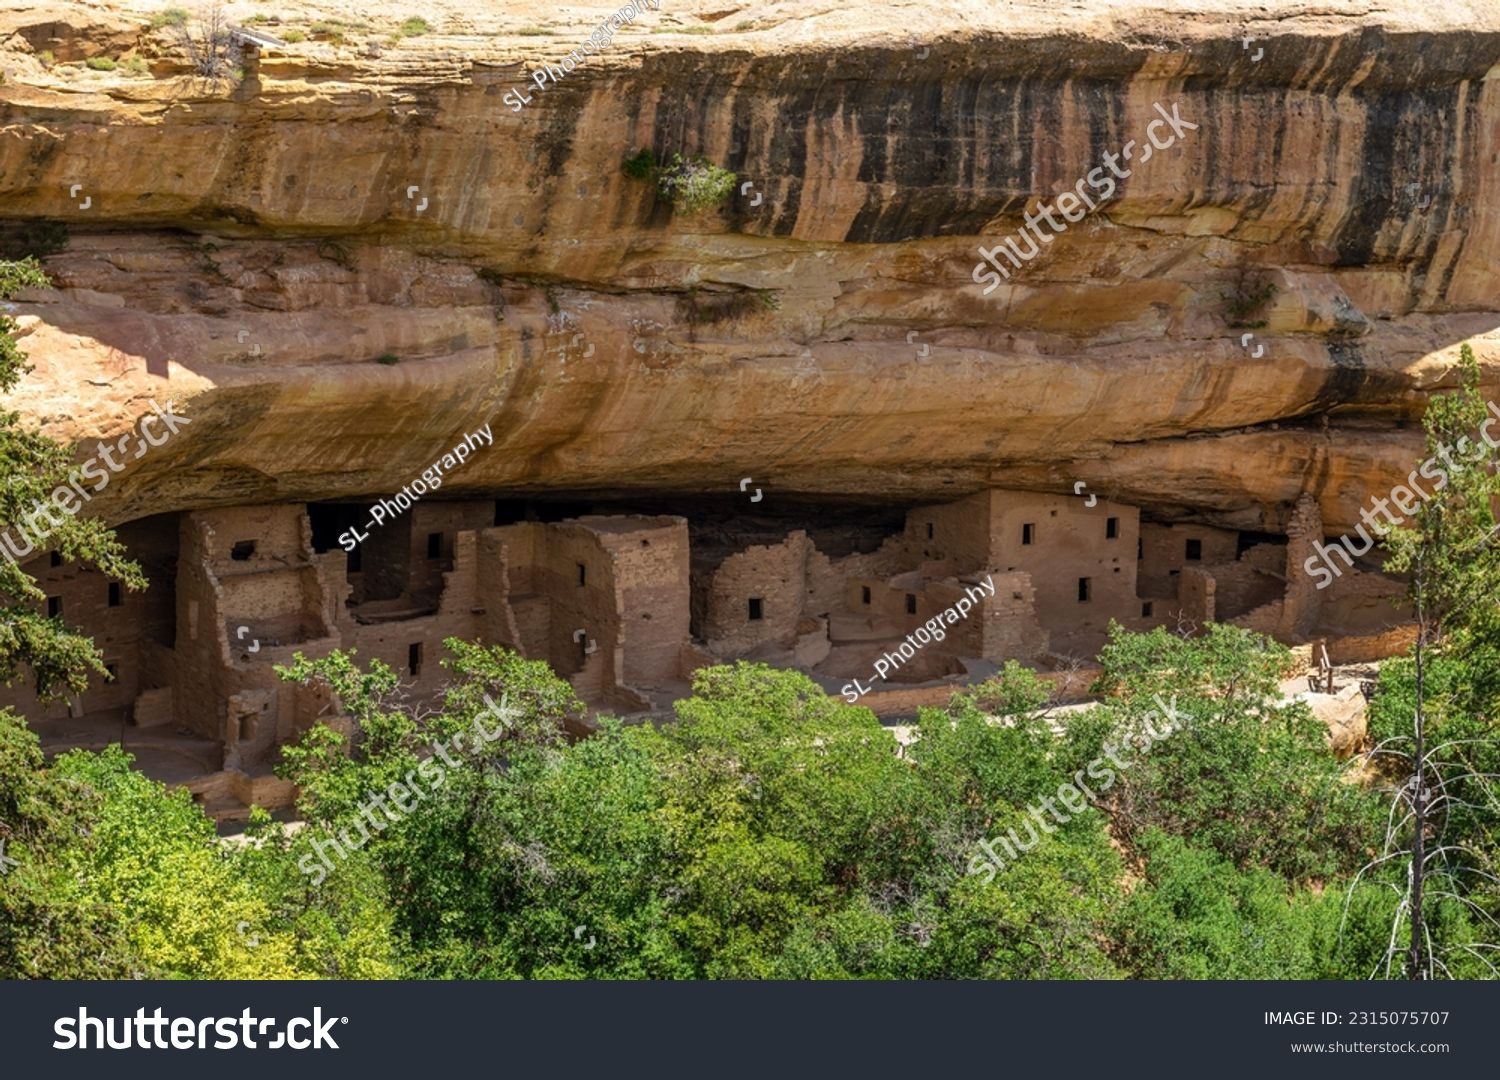 Spruce Tree House cliff dwelling of the Pueblo Anasazi indigenous people, Mesa Verde national park, Colorado, USA. #2315075707